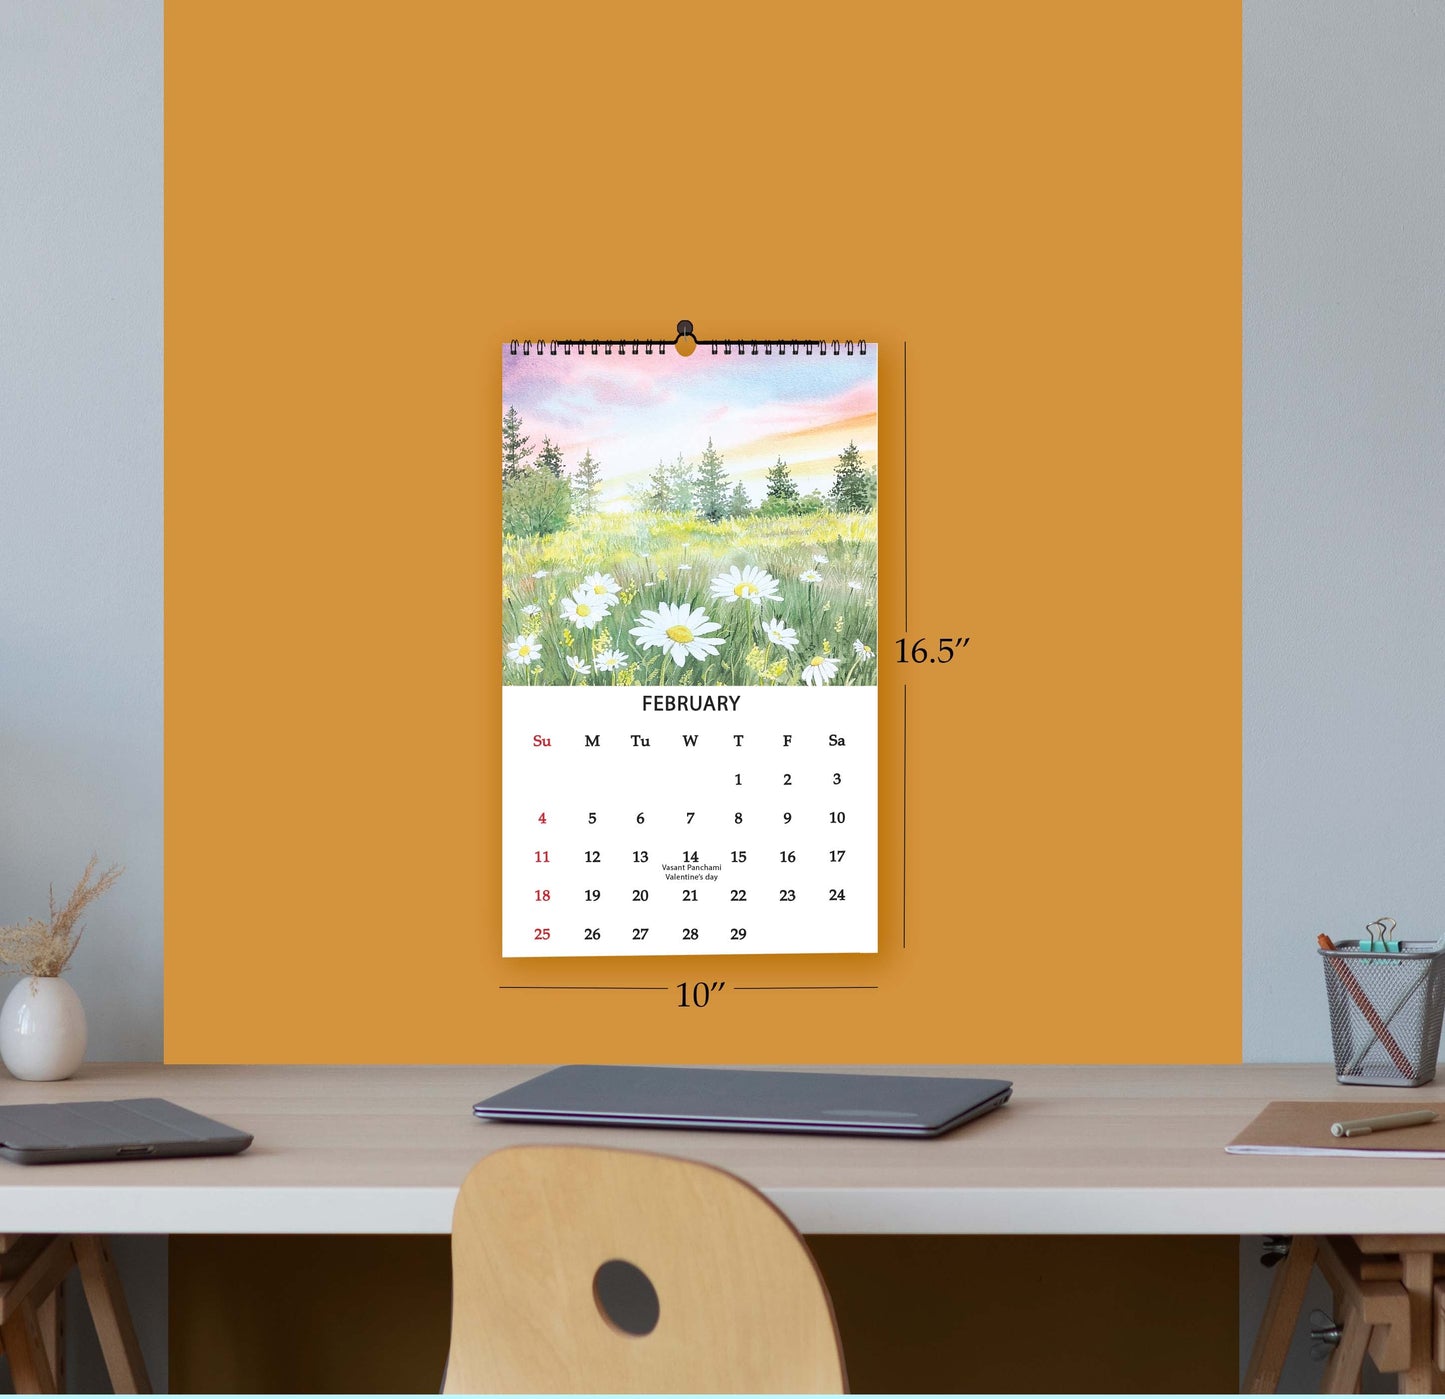 Nature's Retreat Wall Calendar 2024